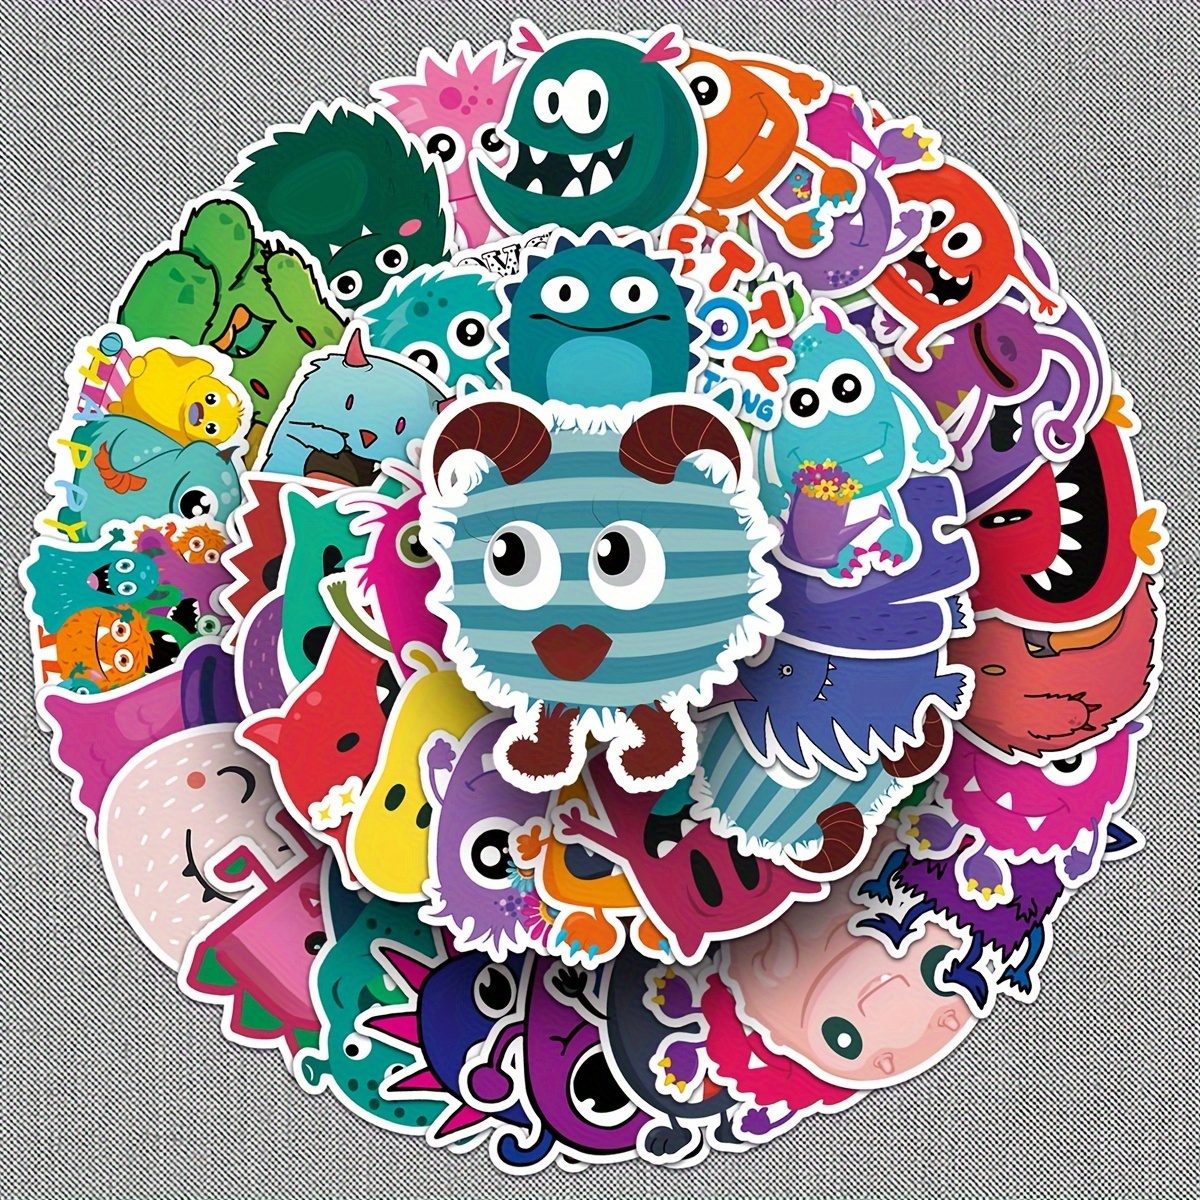 

50pcs Little Monster Cute Cartoon Creative Trend Graffiti Stickers, Diy Mobile Phone Luggage Journal Waterproof Decorative Stickers